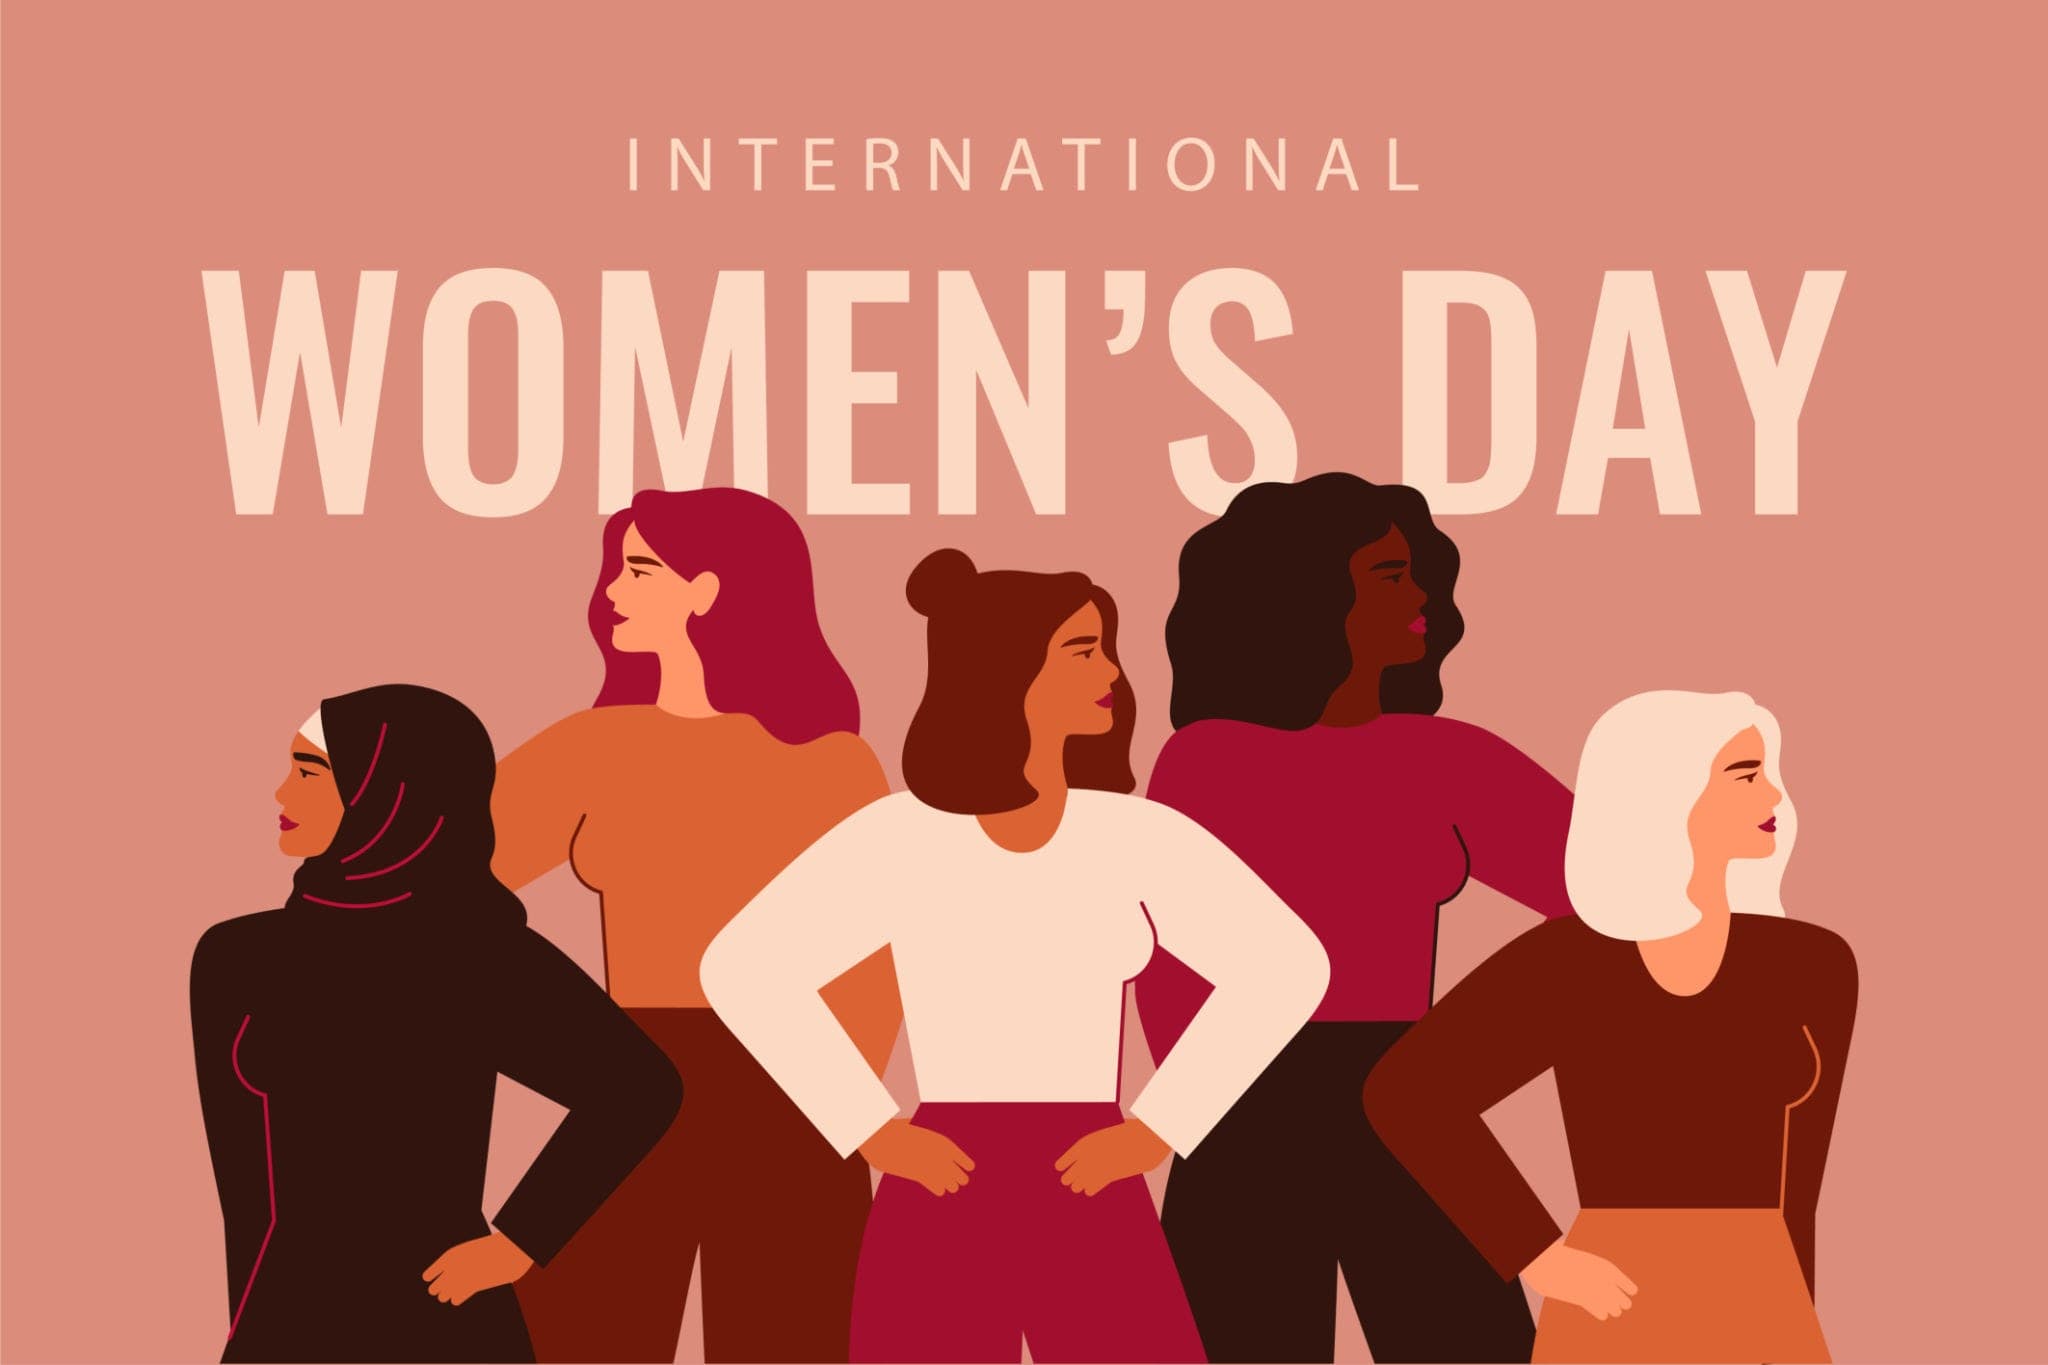 International Women's Day Trivia - All Things Women - IWD Quiz